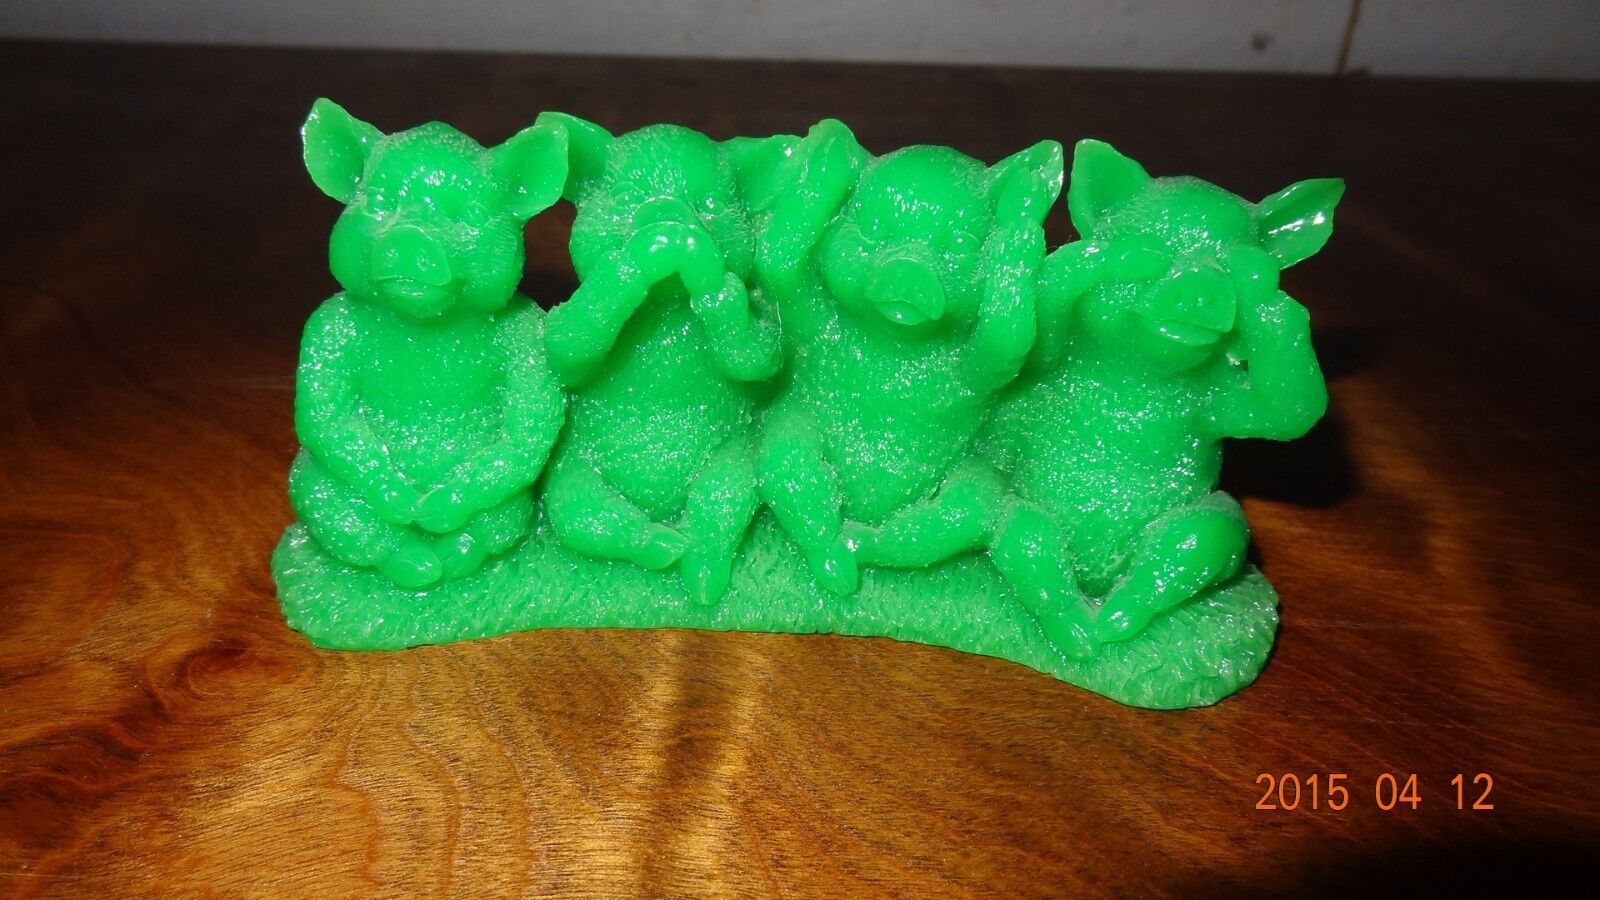 4 Green Pigs figurine of Right Behavior Do,Speak,Hear,See no Evil made of Resin